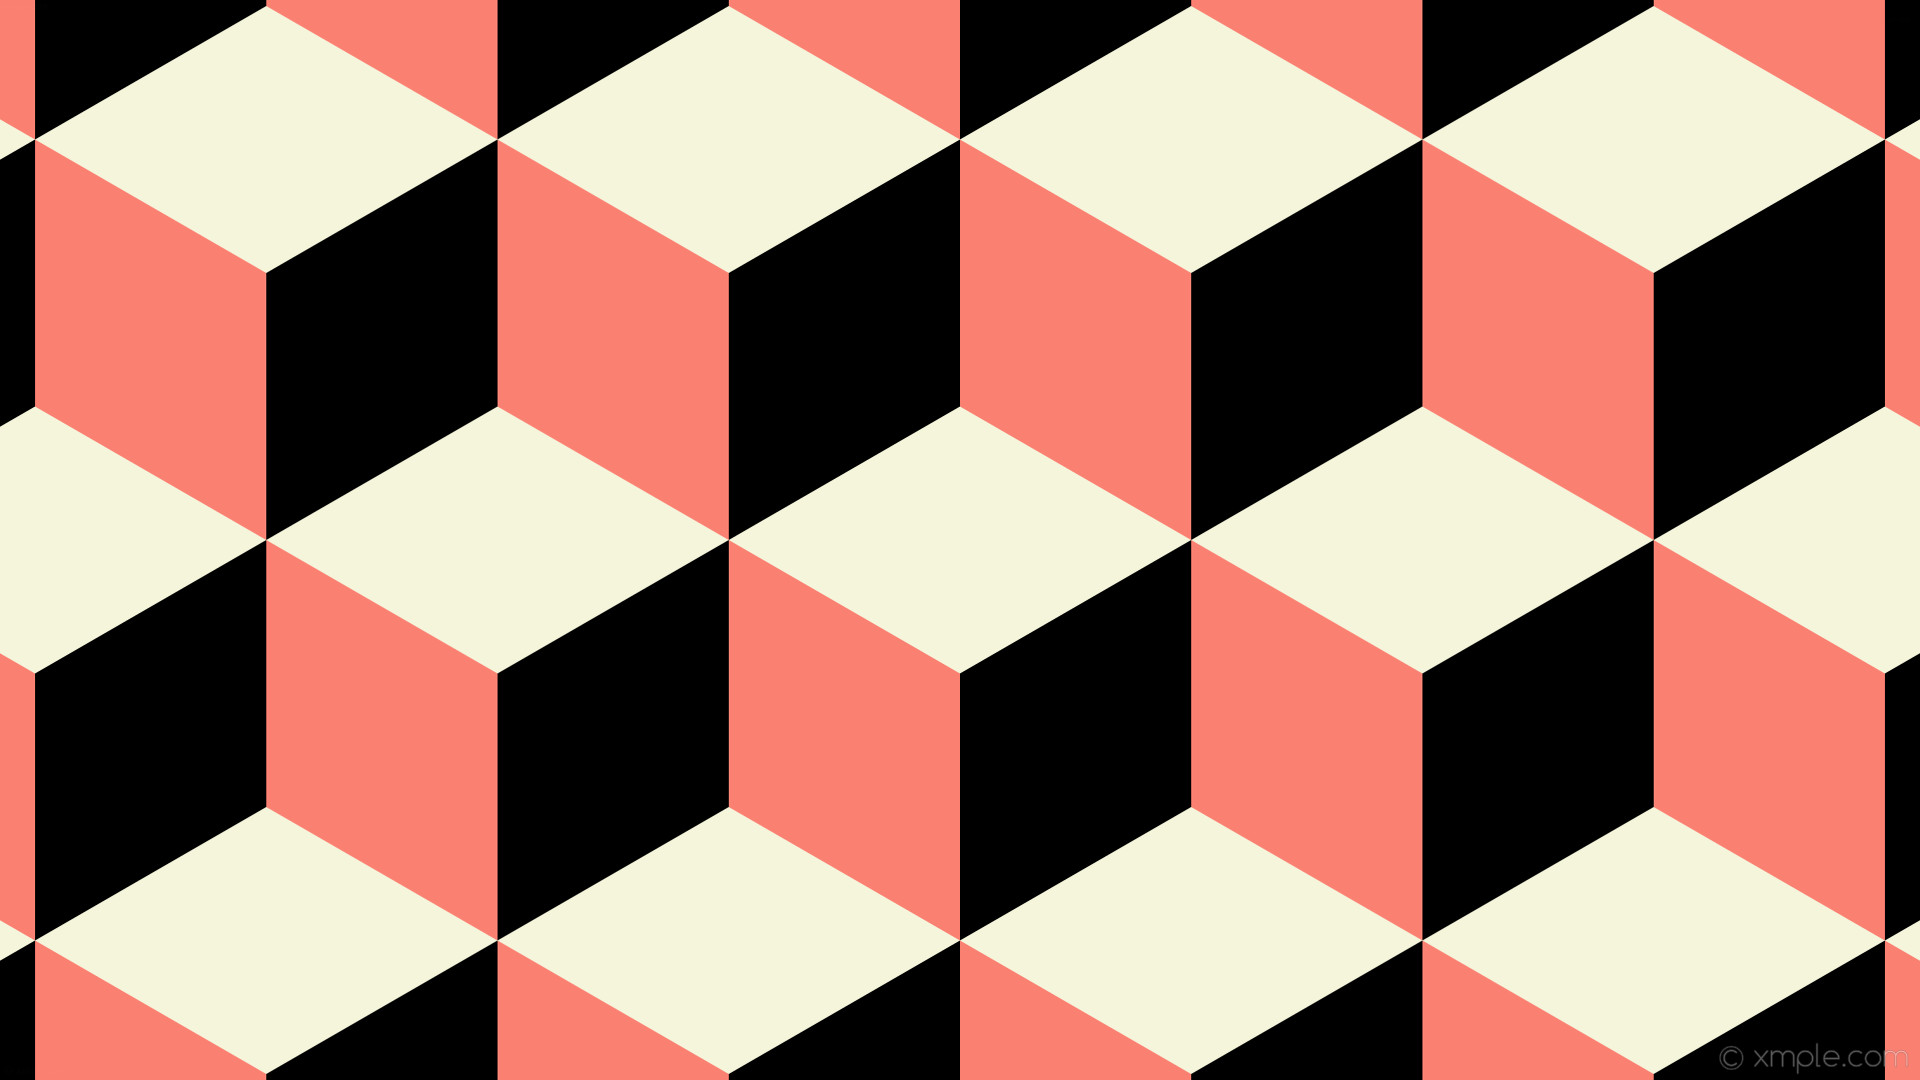 1920x1080 wallpaper white black 3d cubes red beige salmon #f5f5dc #fa8072 #000000 180Â°